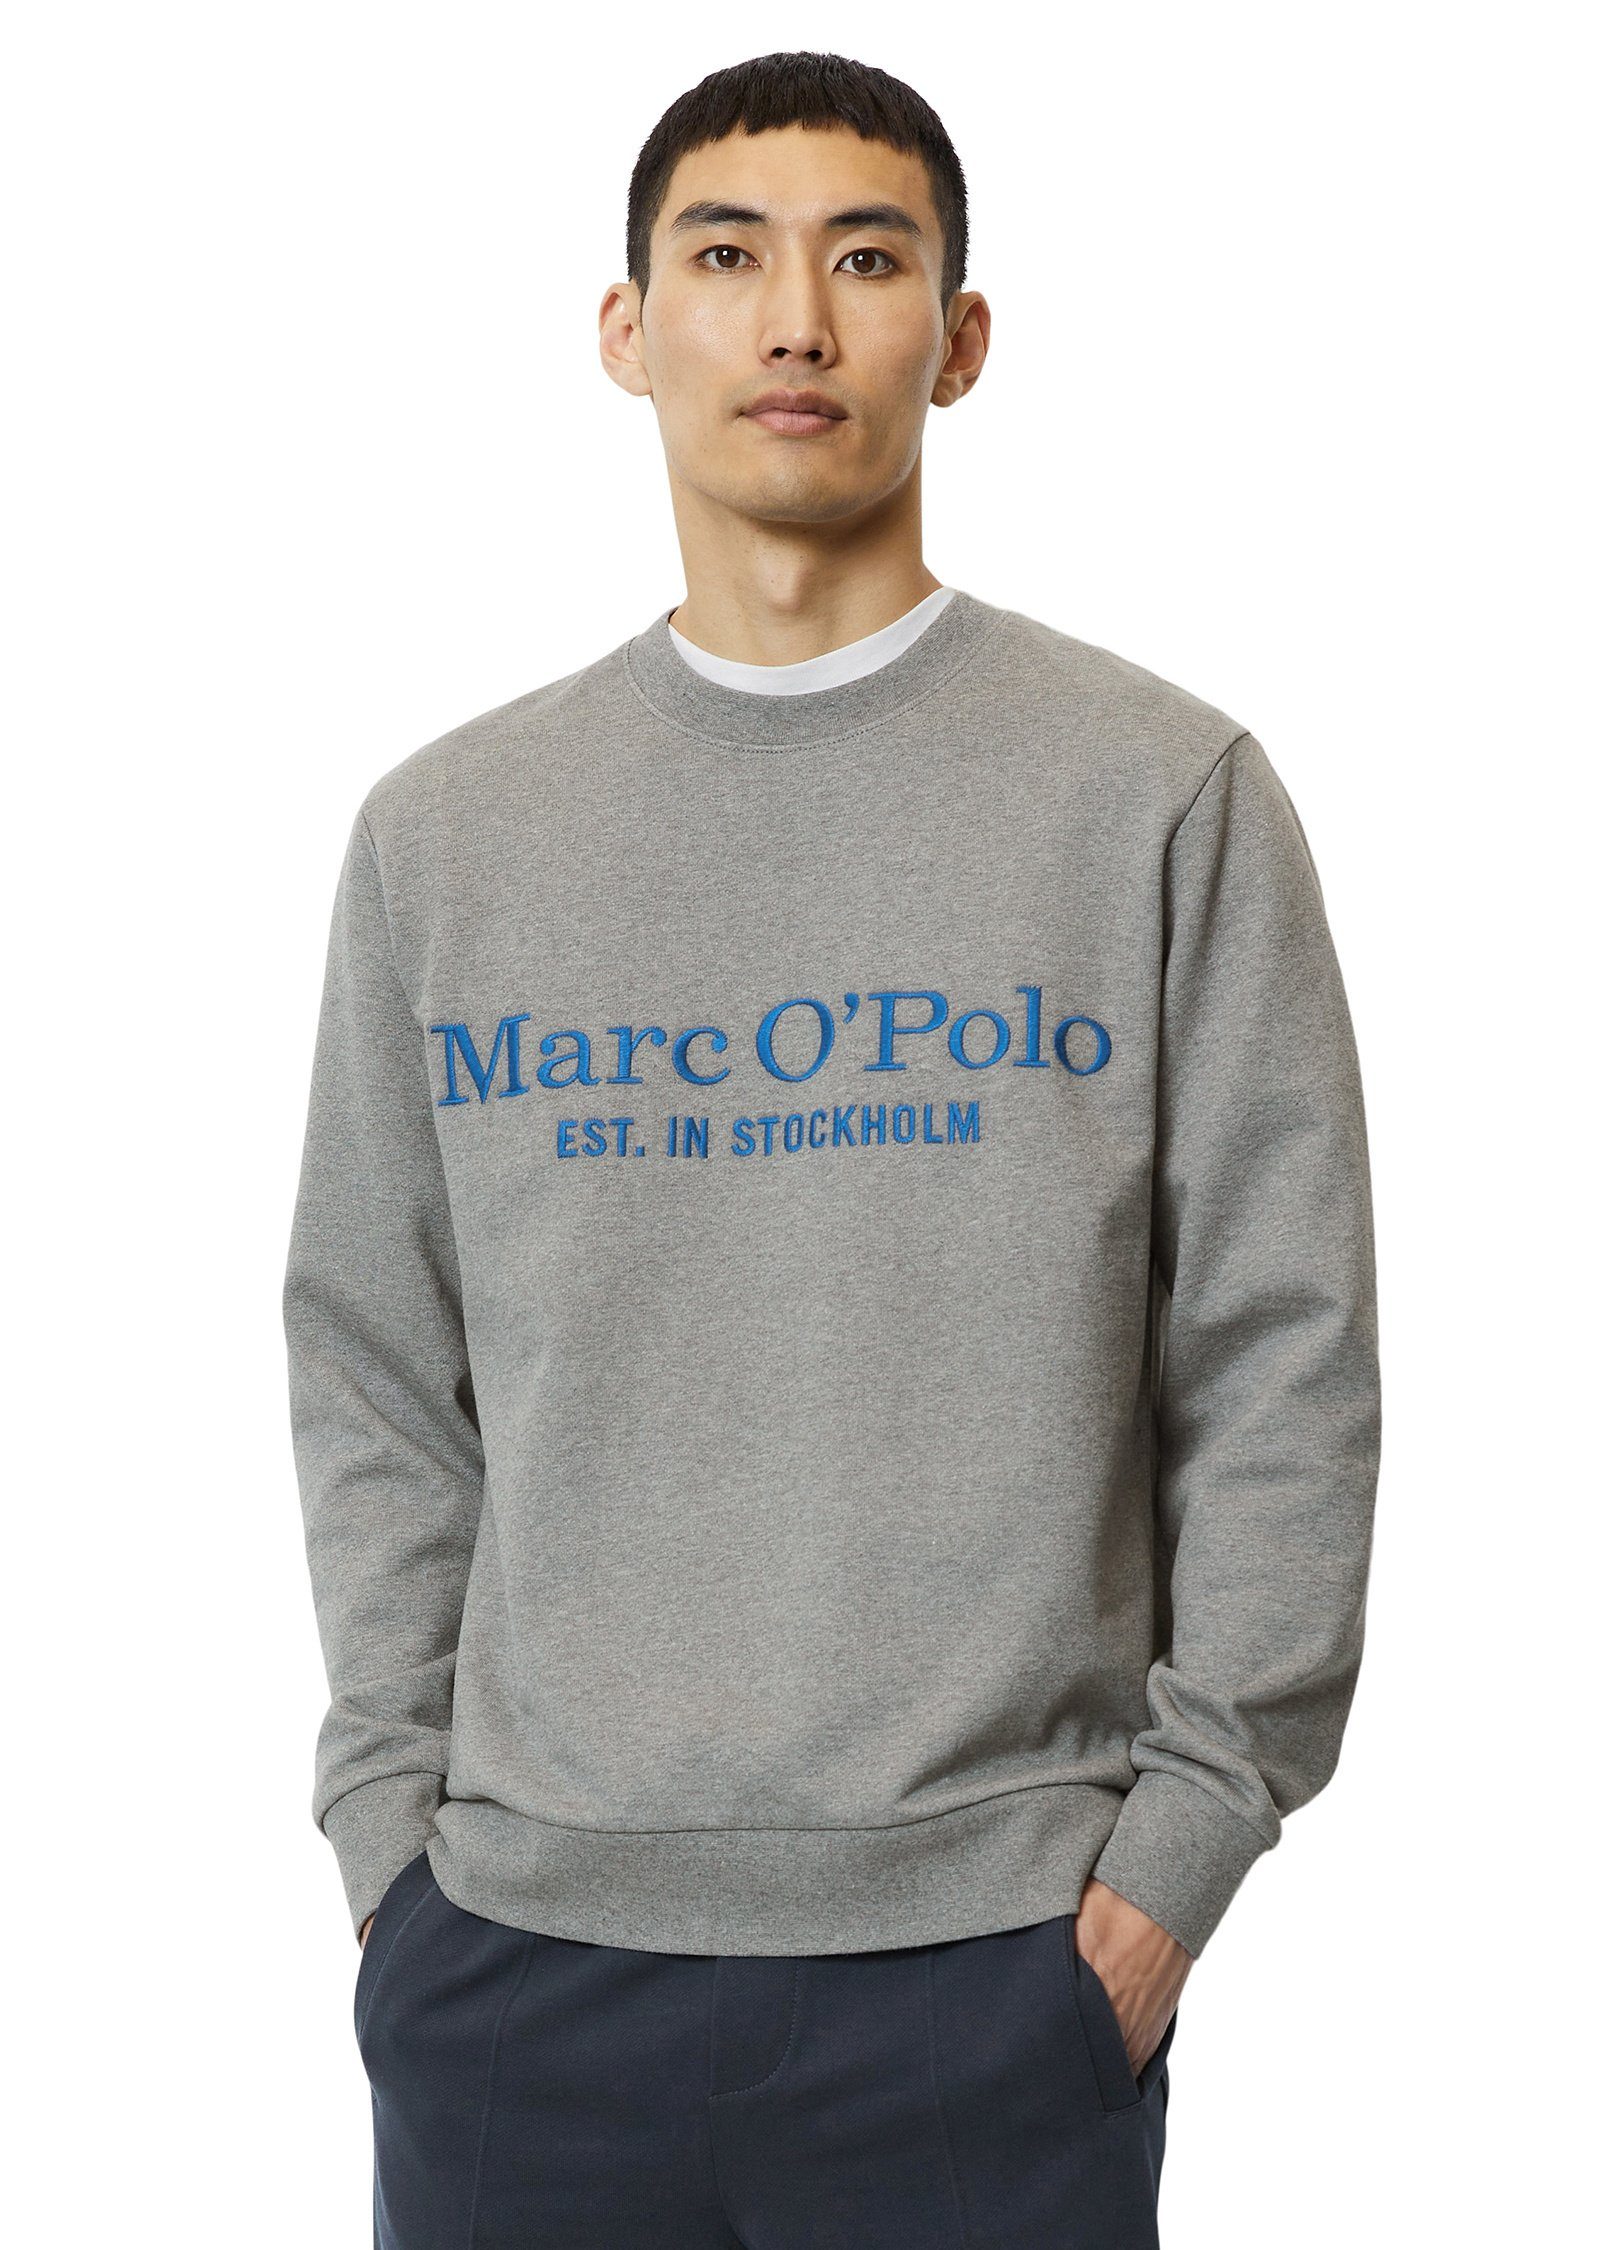 Marc O'Polo Sweatshirt aus reiner Bio-Baumwolle grau | Sweatshirts